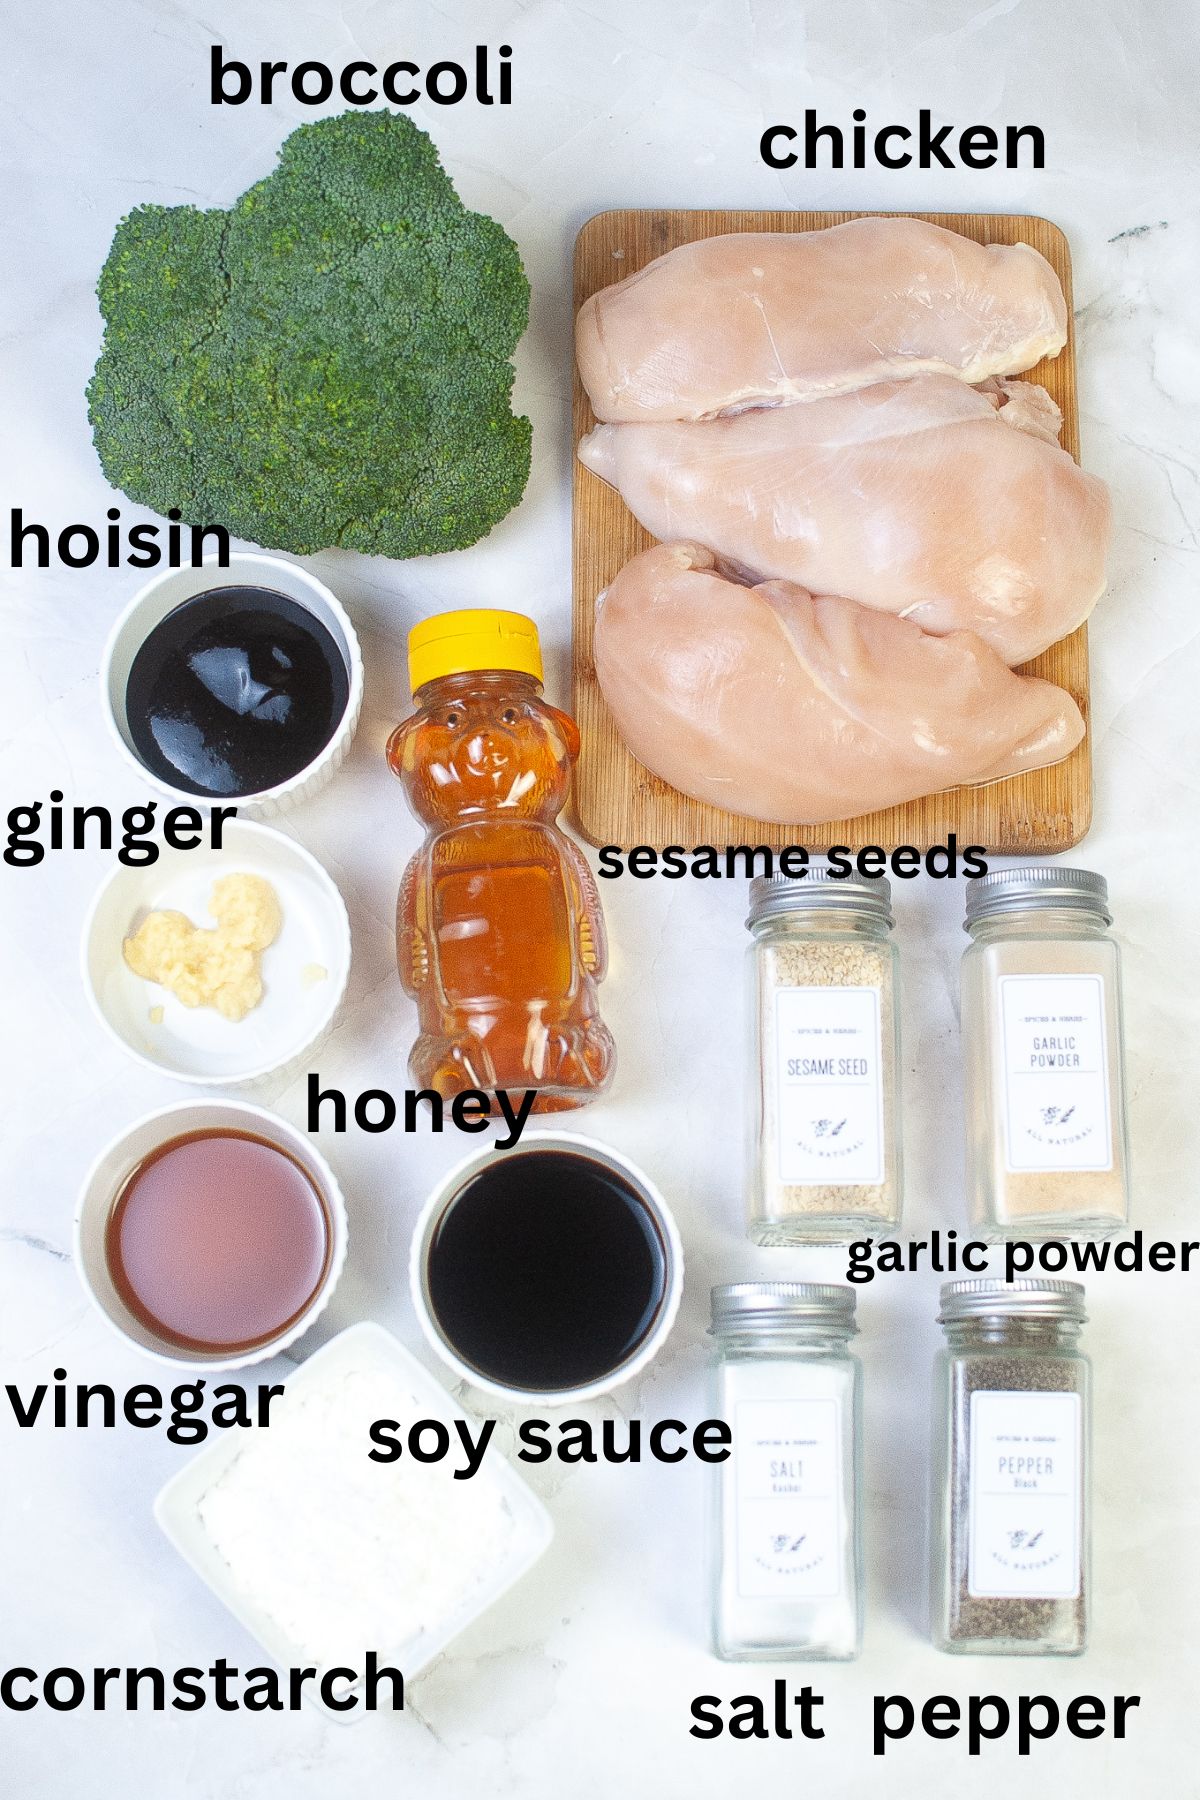 broccoli, chicken breasts, hoisin, ginger, honey, sesame seeds, garlic powder, salt, pepper, vinegar, soy sauce, and cornstarch on a white backdrop